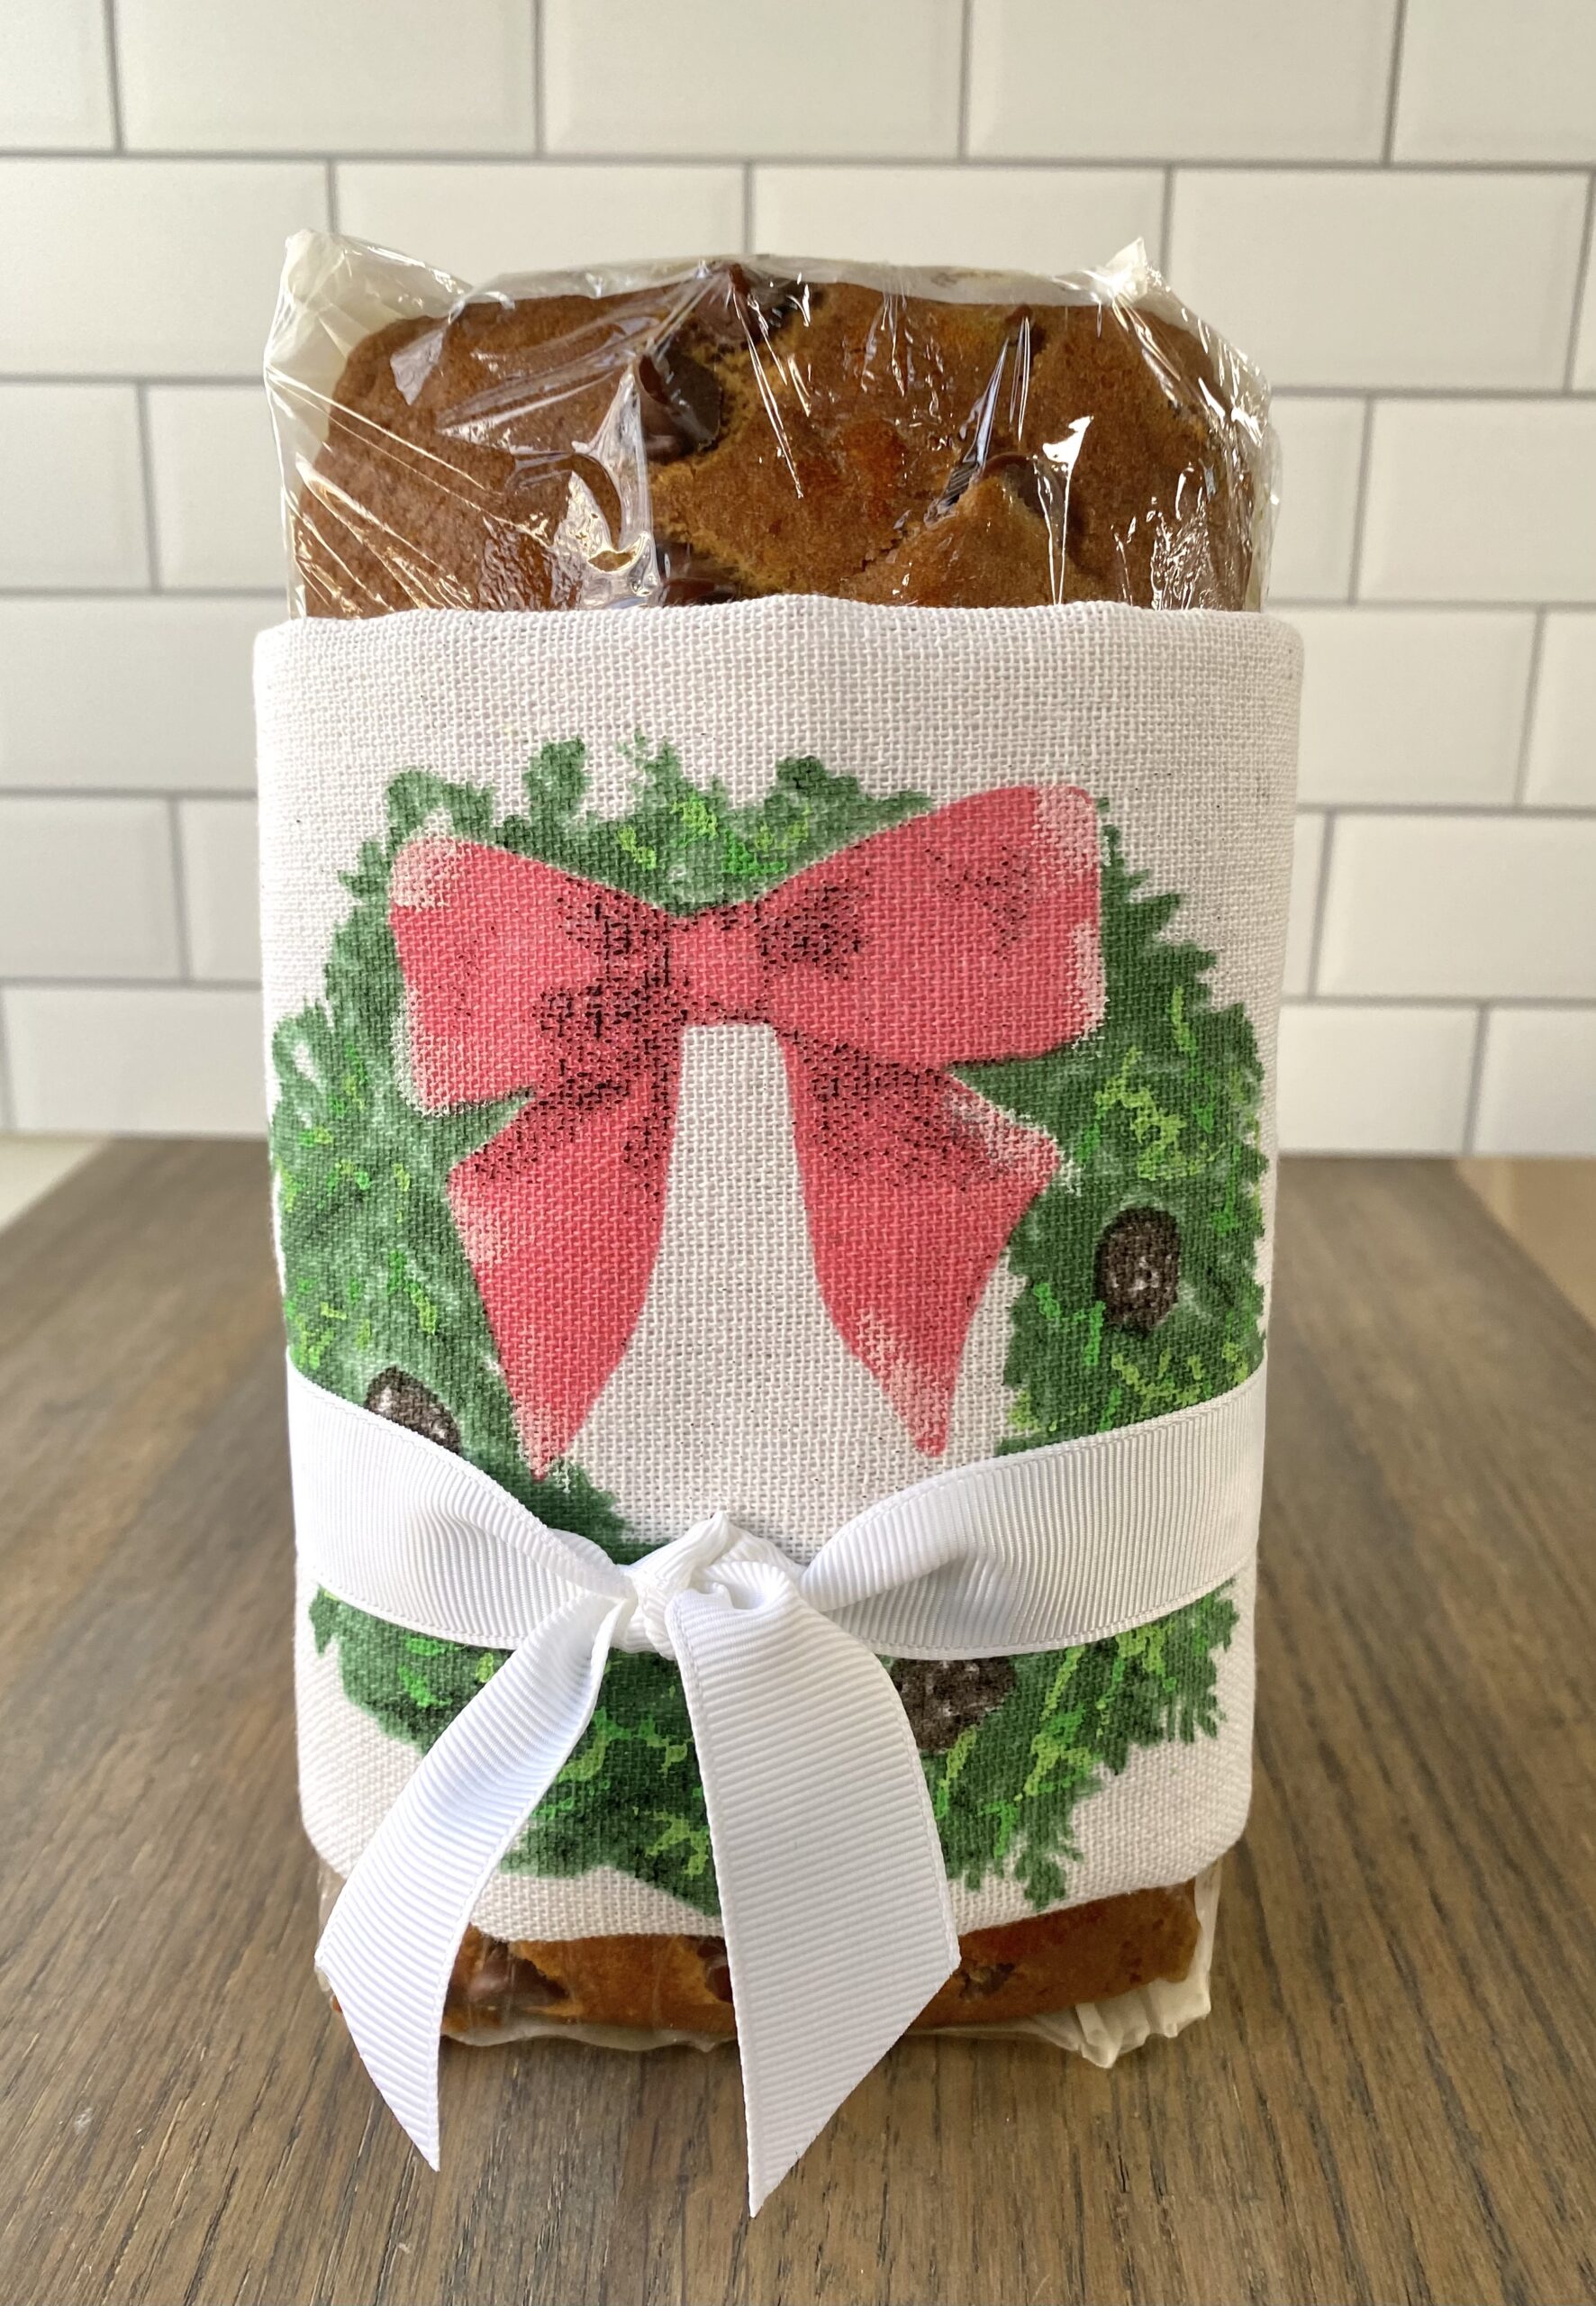 Bread + Tea Towel (pumpkin chocolate chip/wreath)